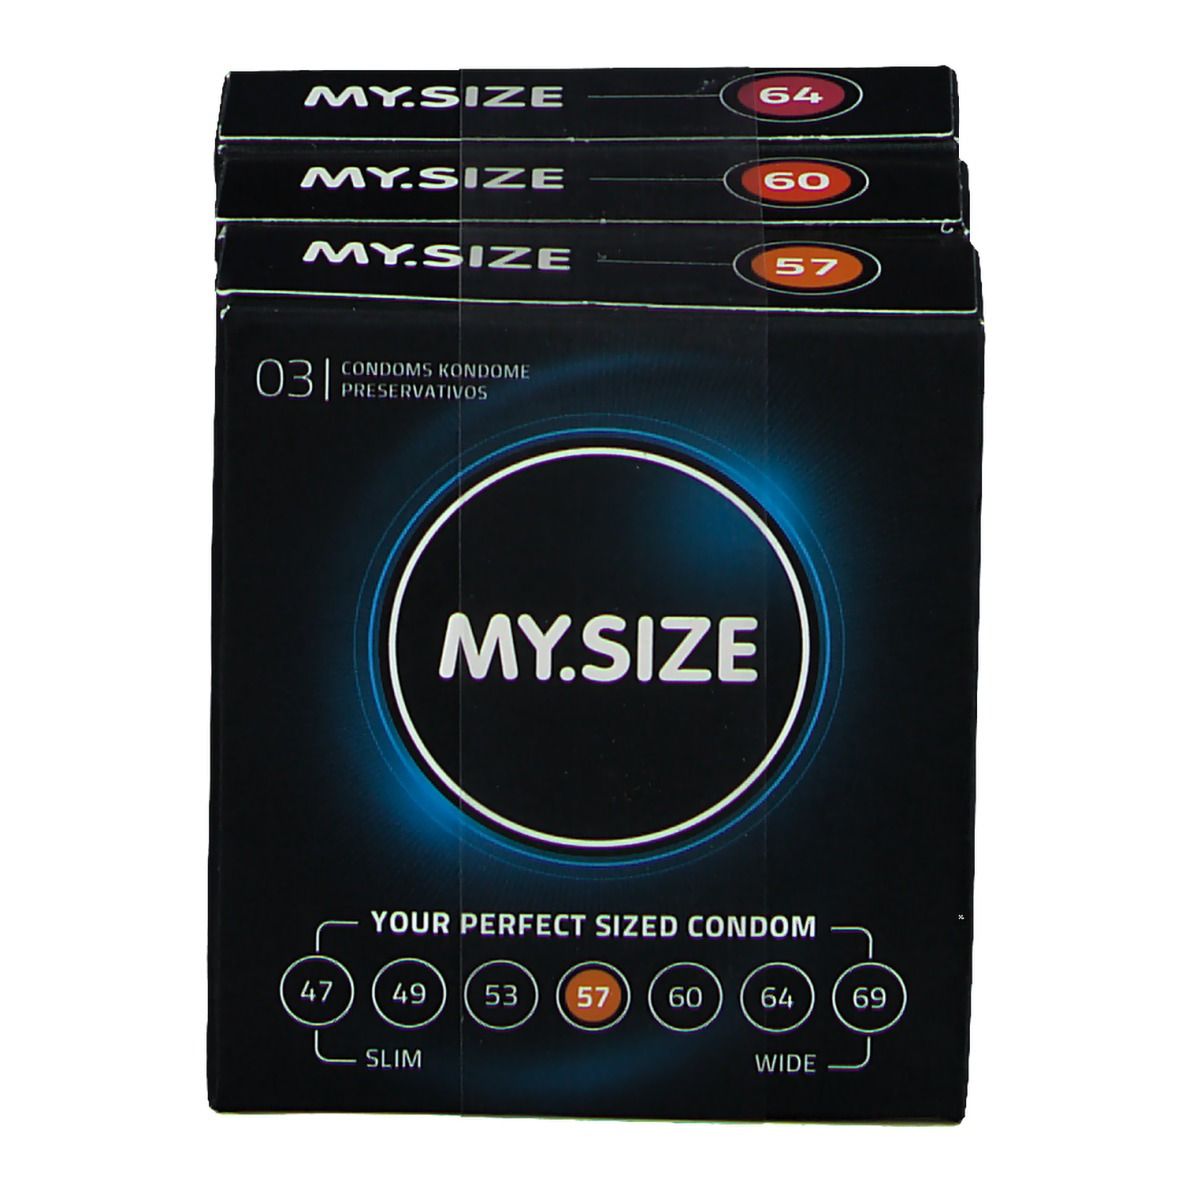 MY.SIZE 57 60 64 Kondome Testpack